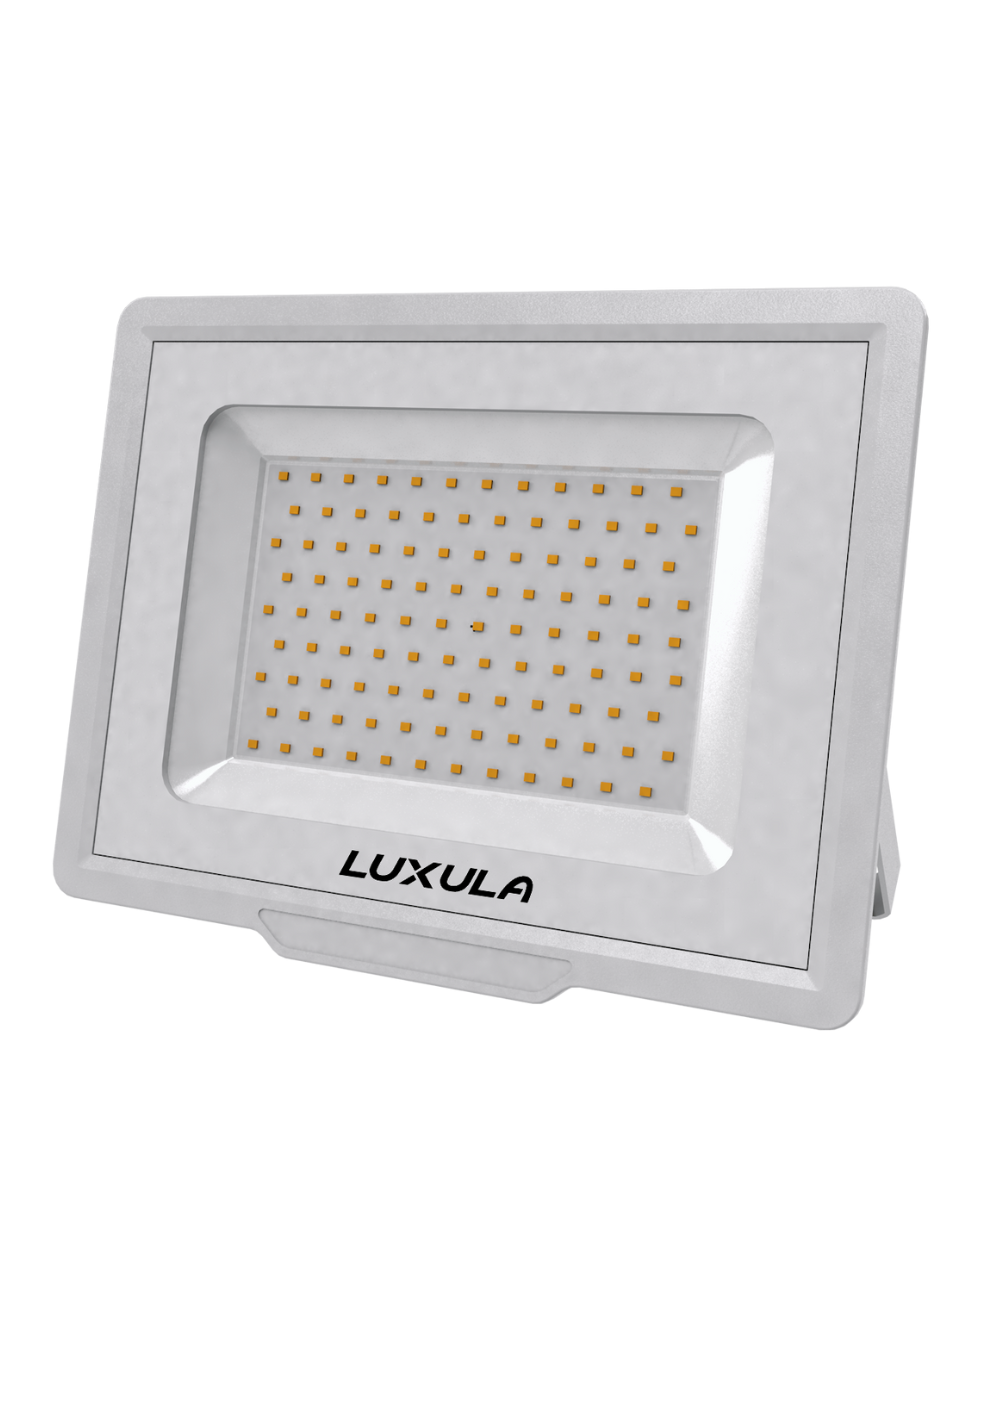 LED-Fluter, 100 W, 3000 K (warmweiß), 10000 lm, weiß, IP65, TÜV-geprüft